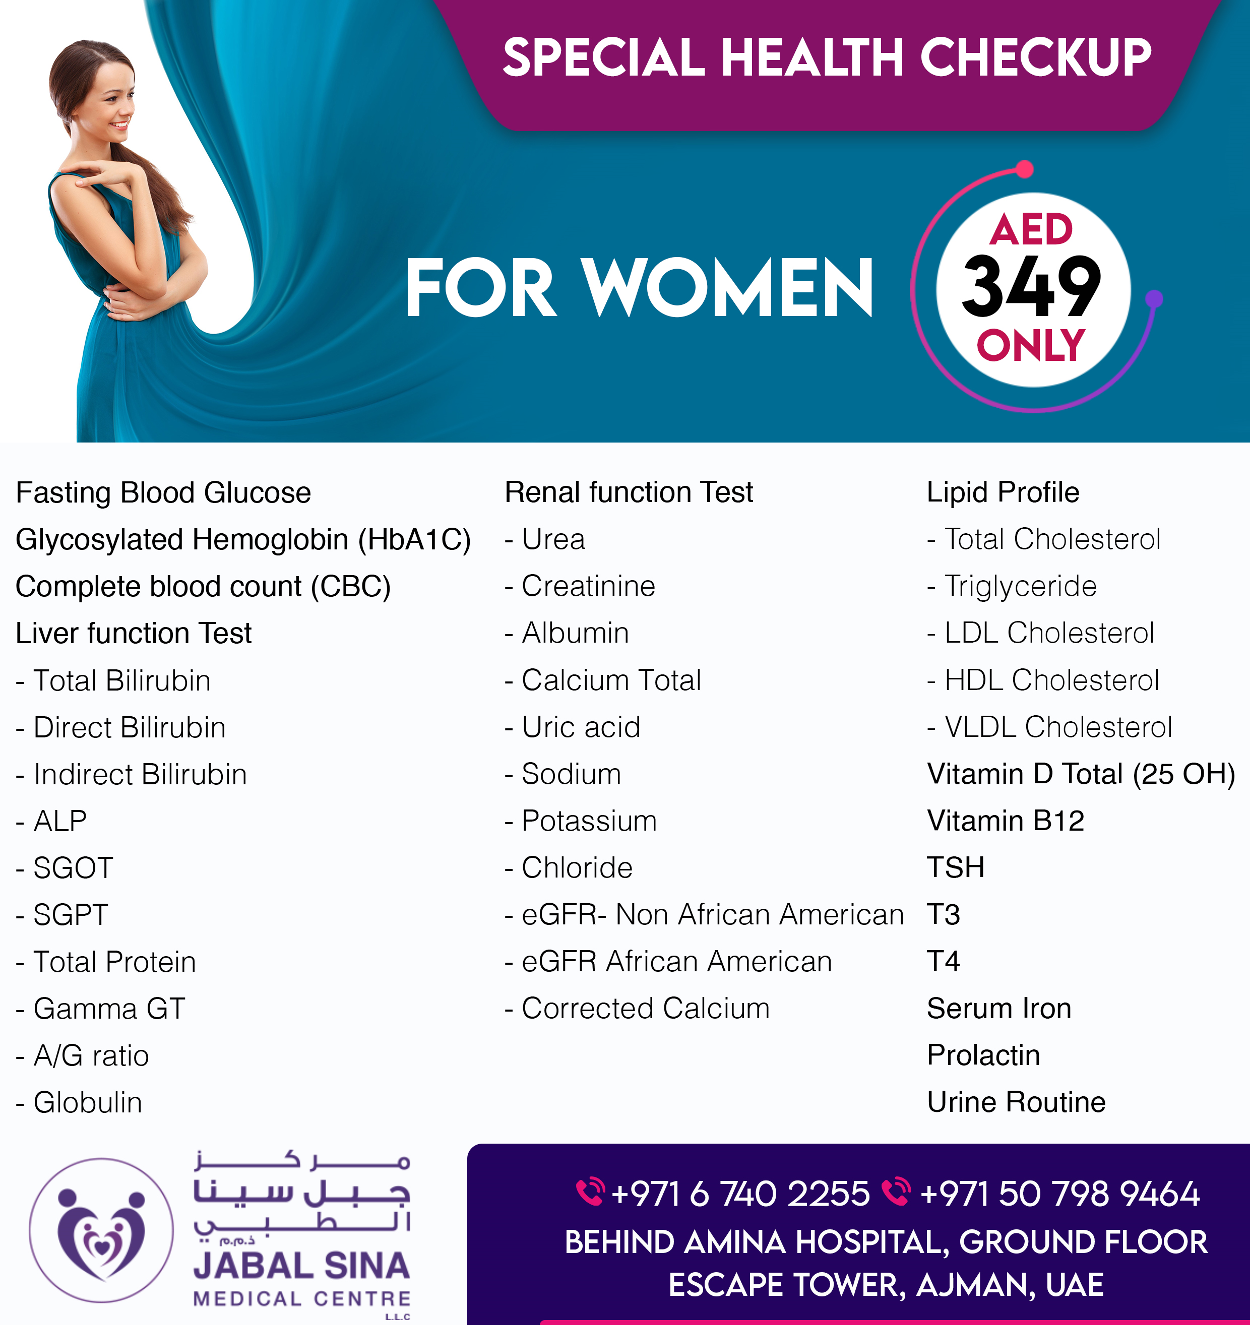 Medical Centre in Ajman and Sharjah, Umm Al Quwain